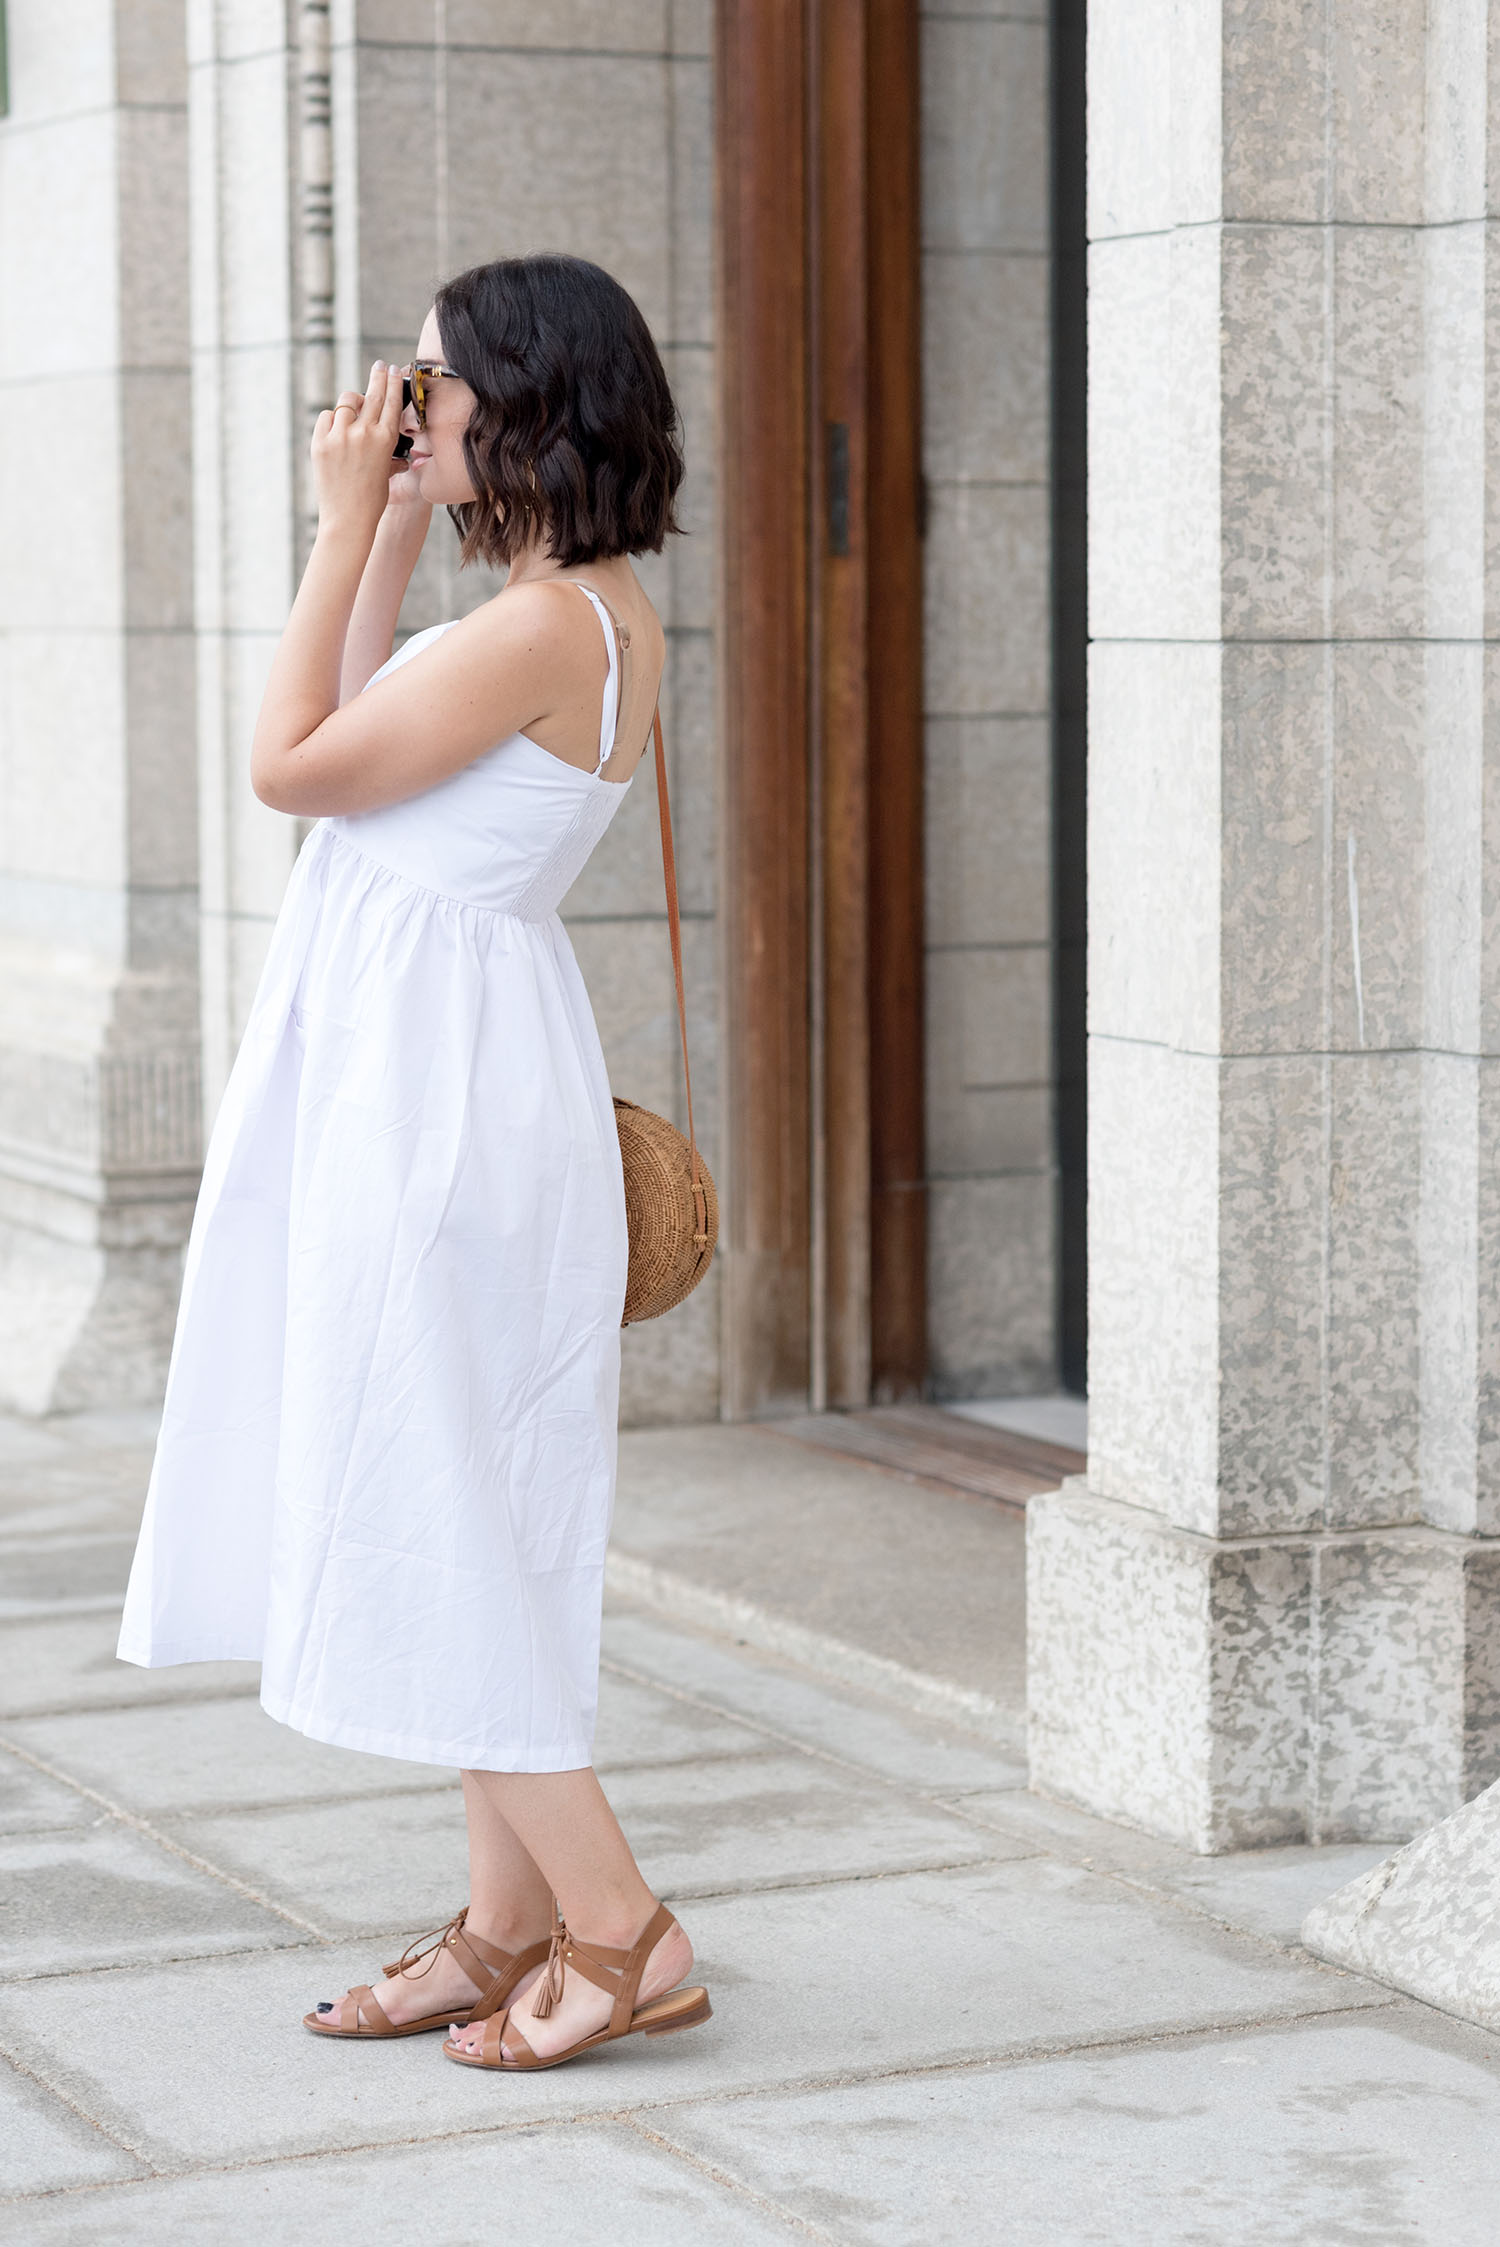 Top Canadian fashion blogger Cee Fardoe of Coco & Vera takes a photo while wearing a white Venidress midi dress